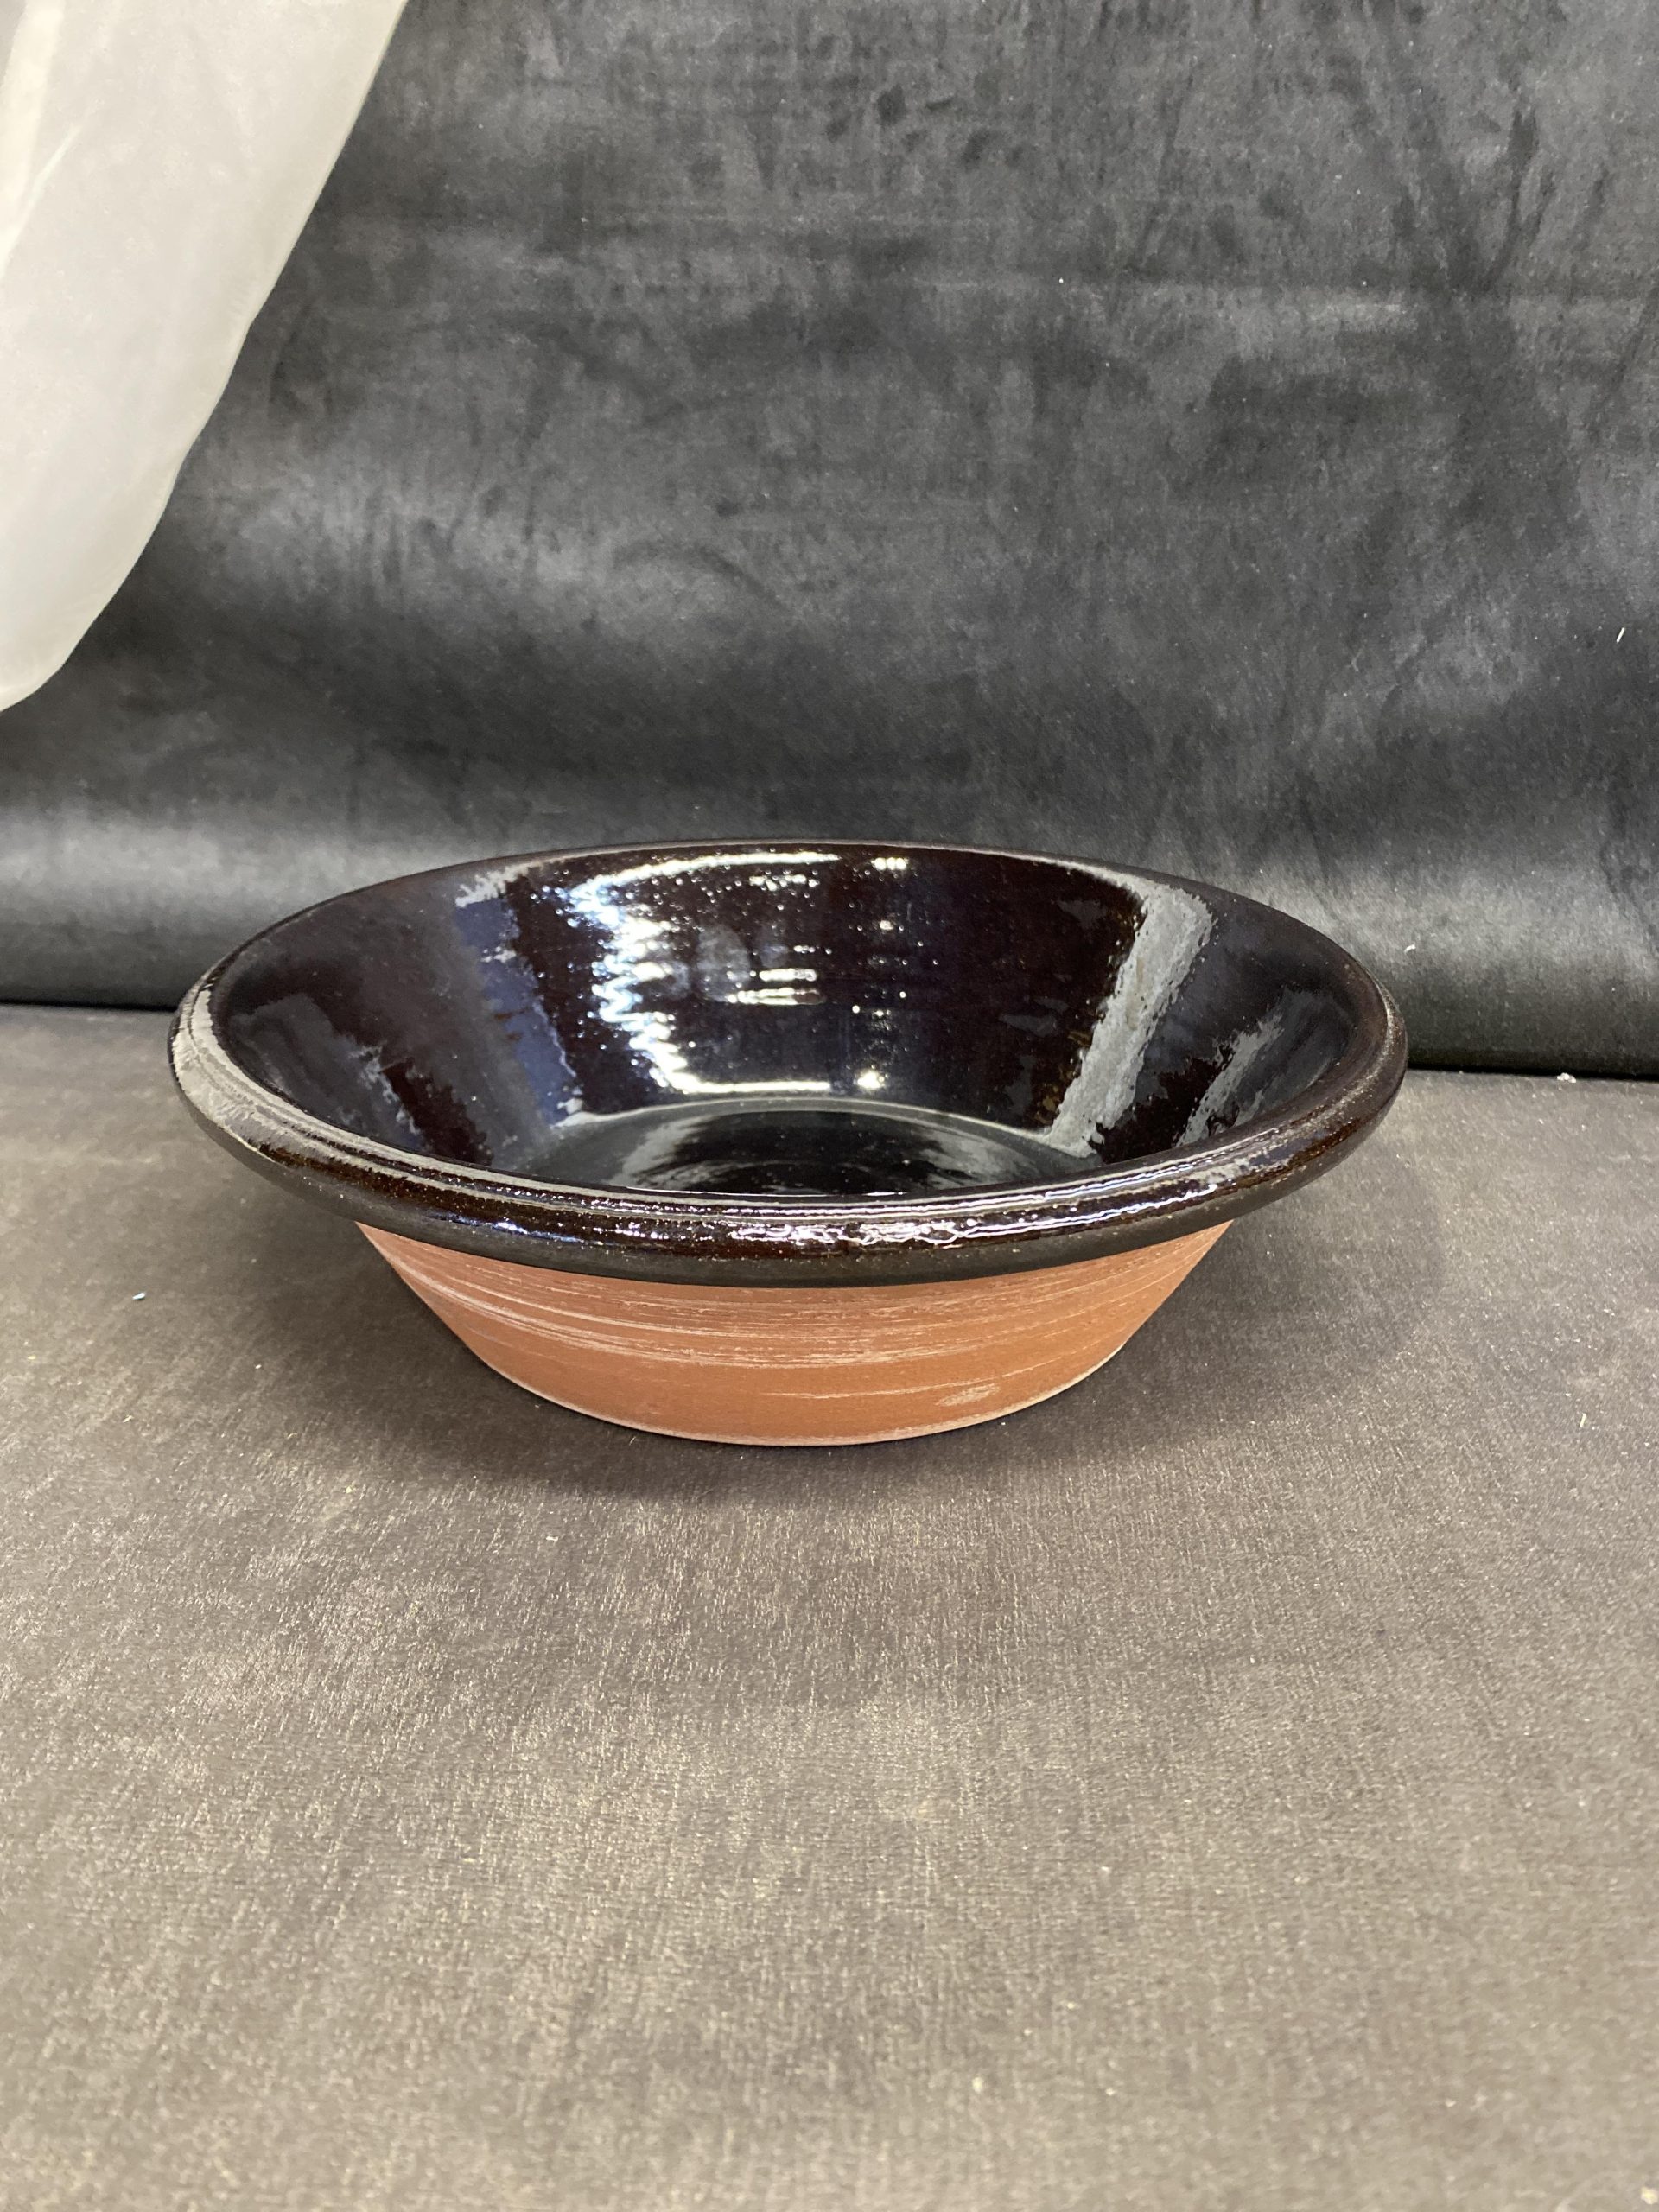 Sherbrooke Village Studio Pottery – Bowl